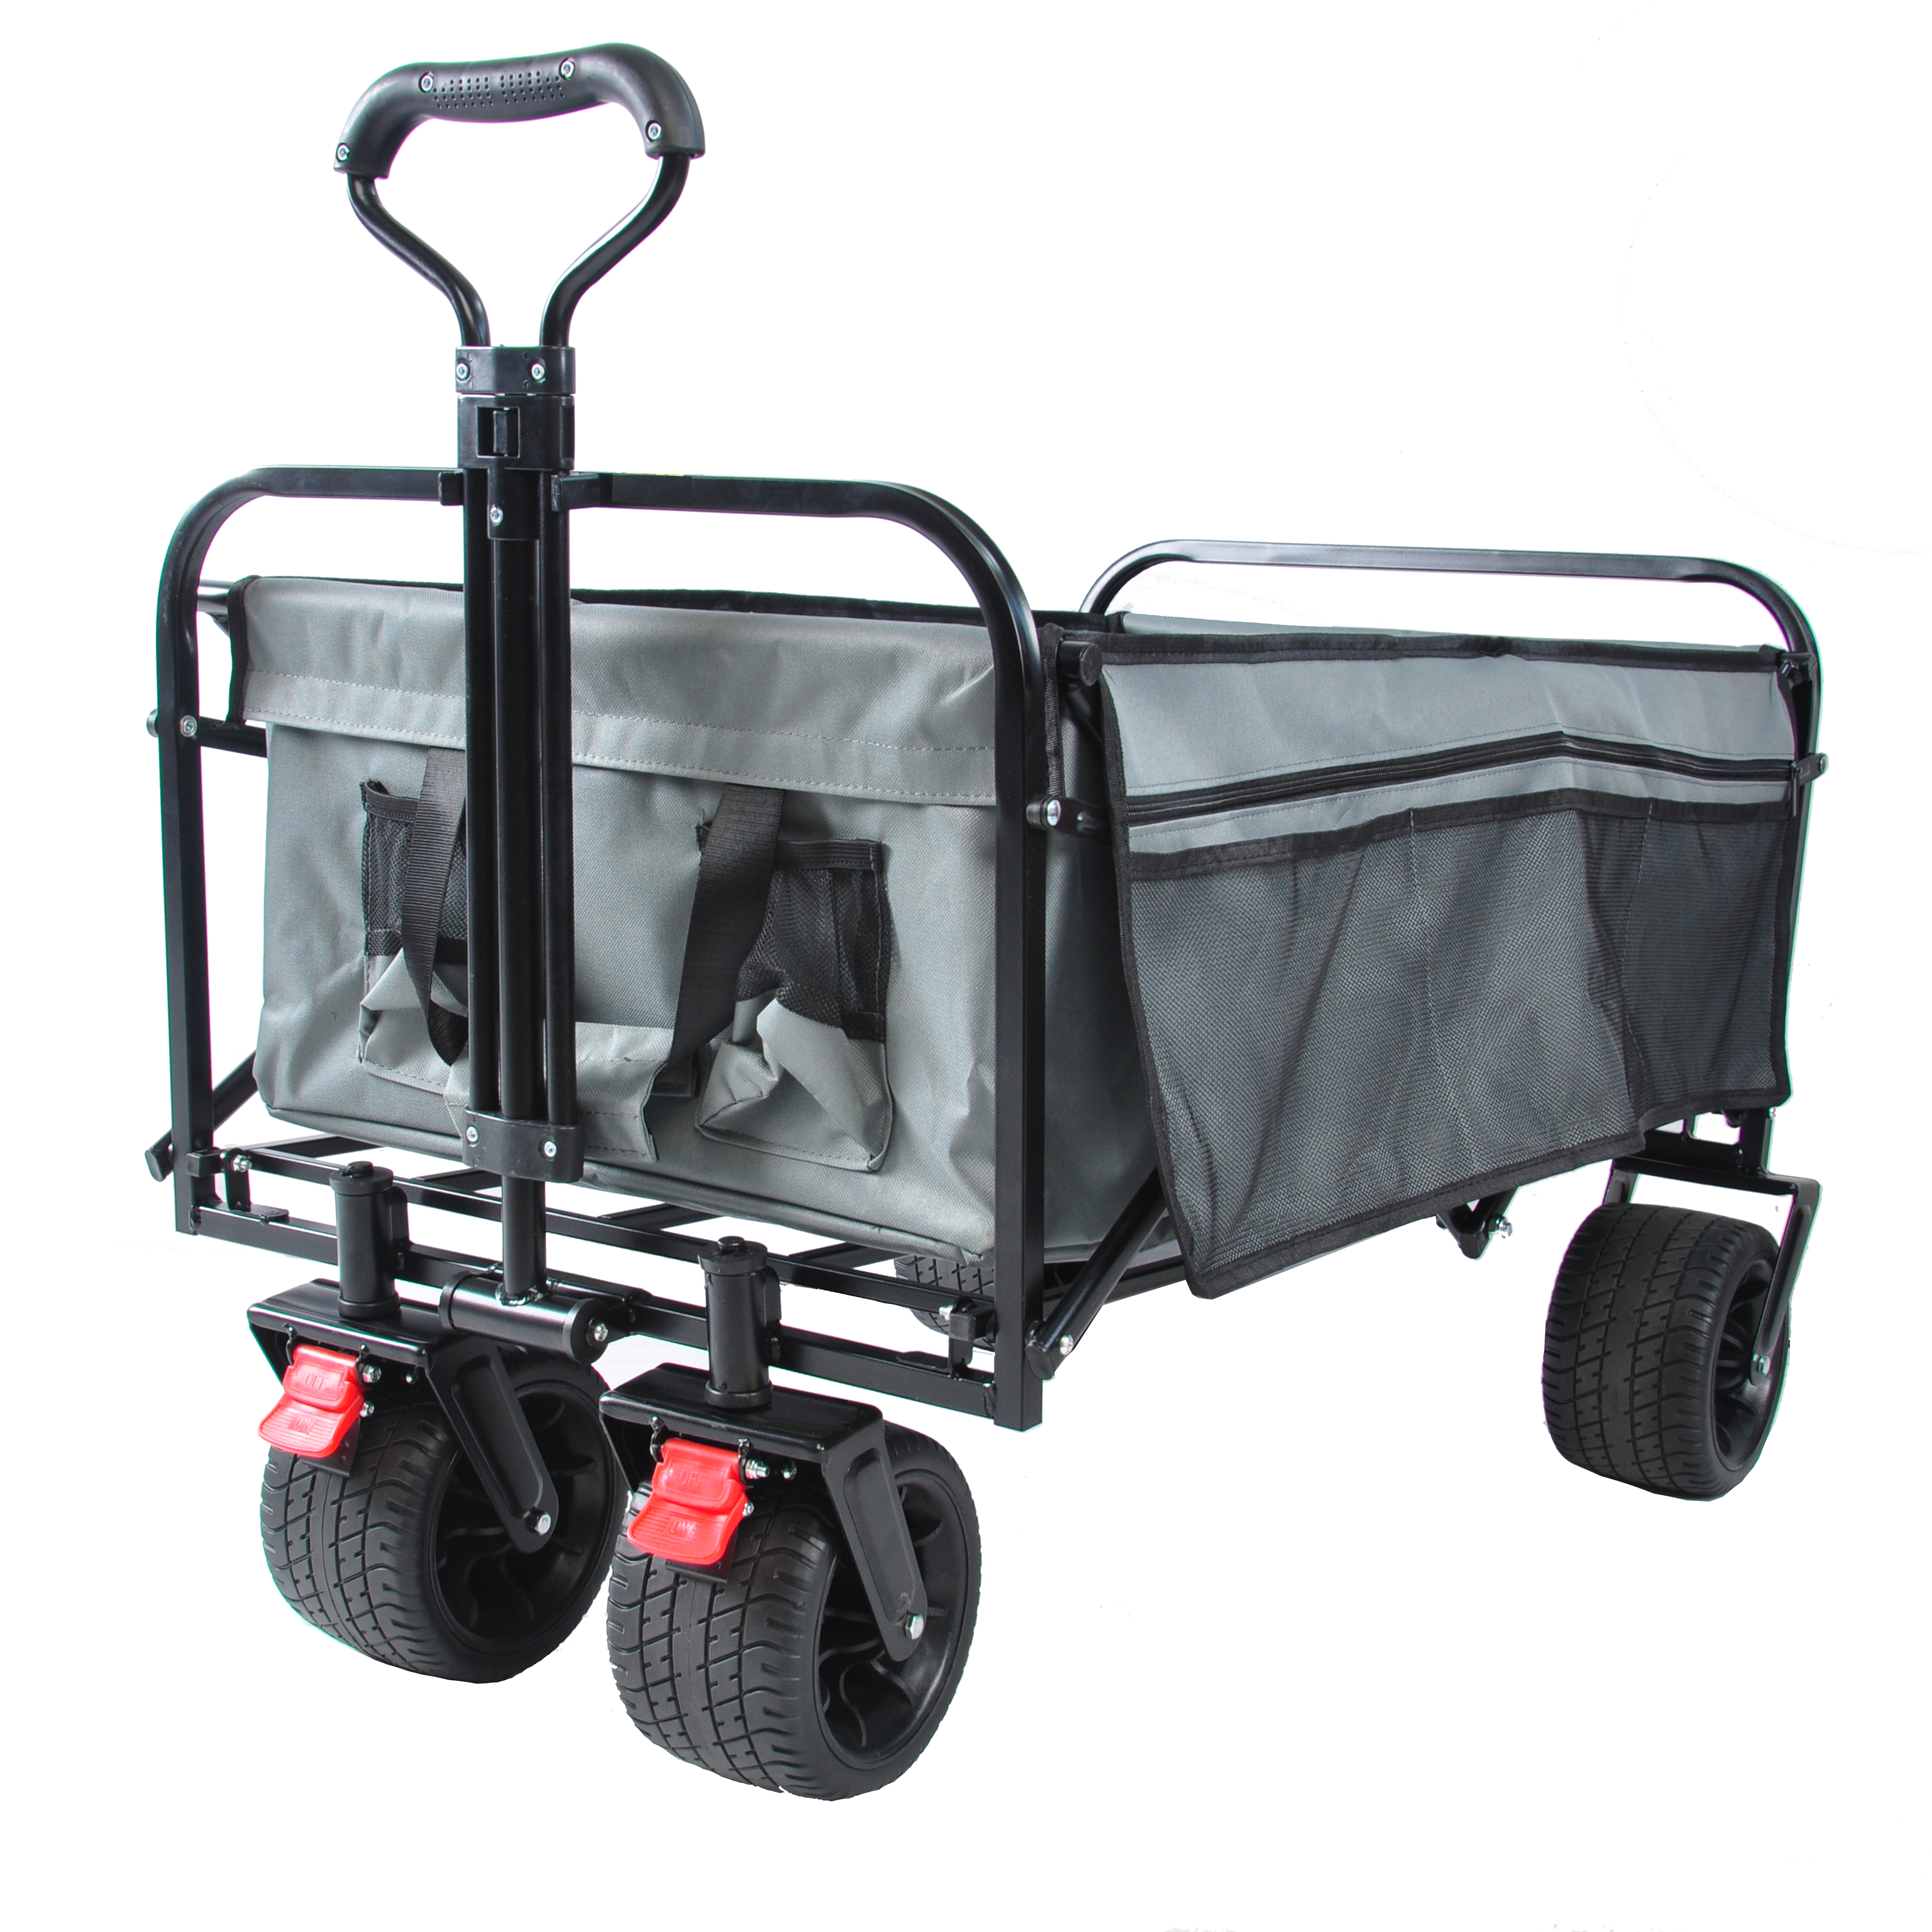 Folding Wagon Garden Shopping Beach Cart (grey)